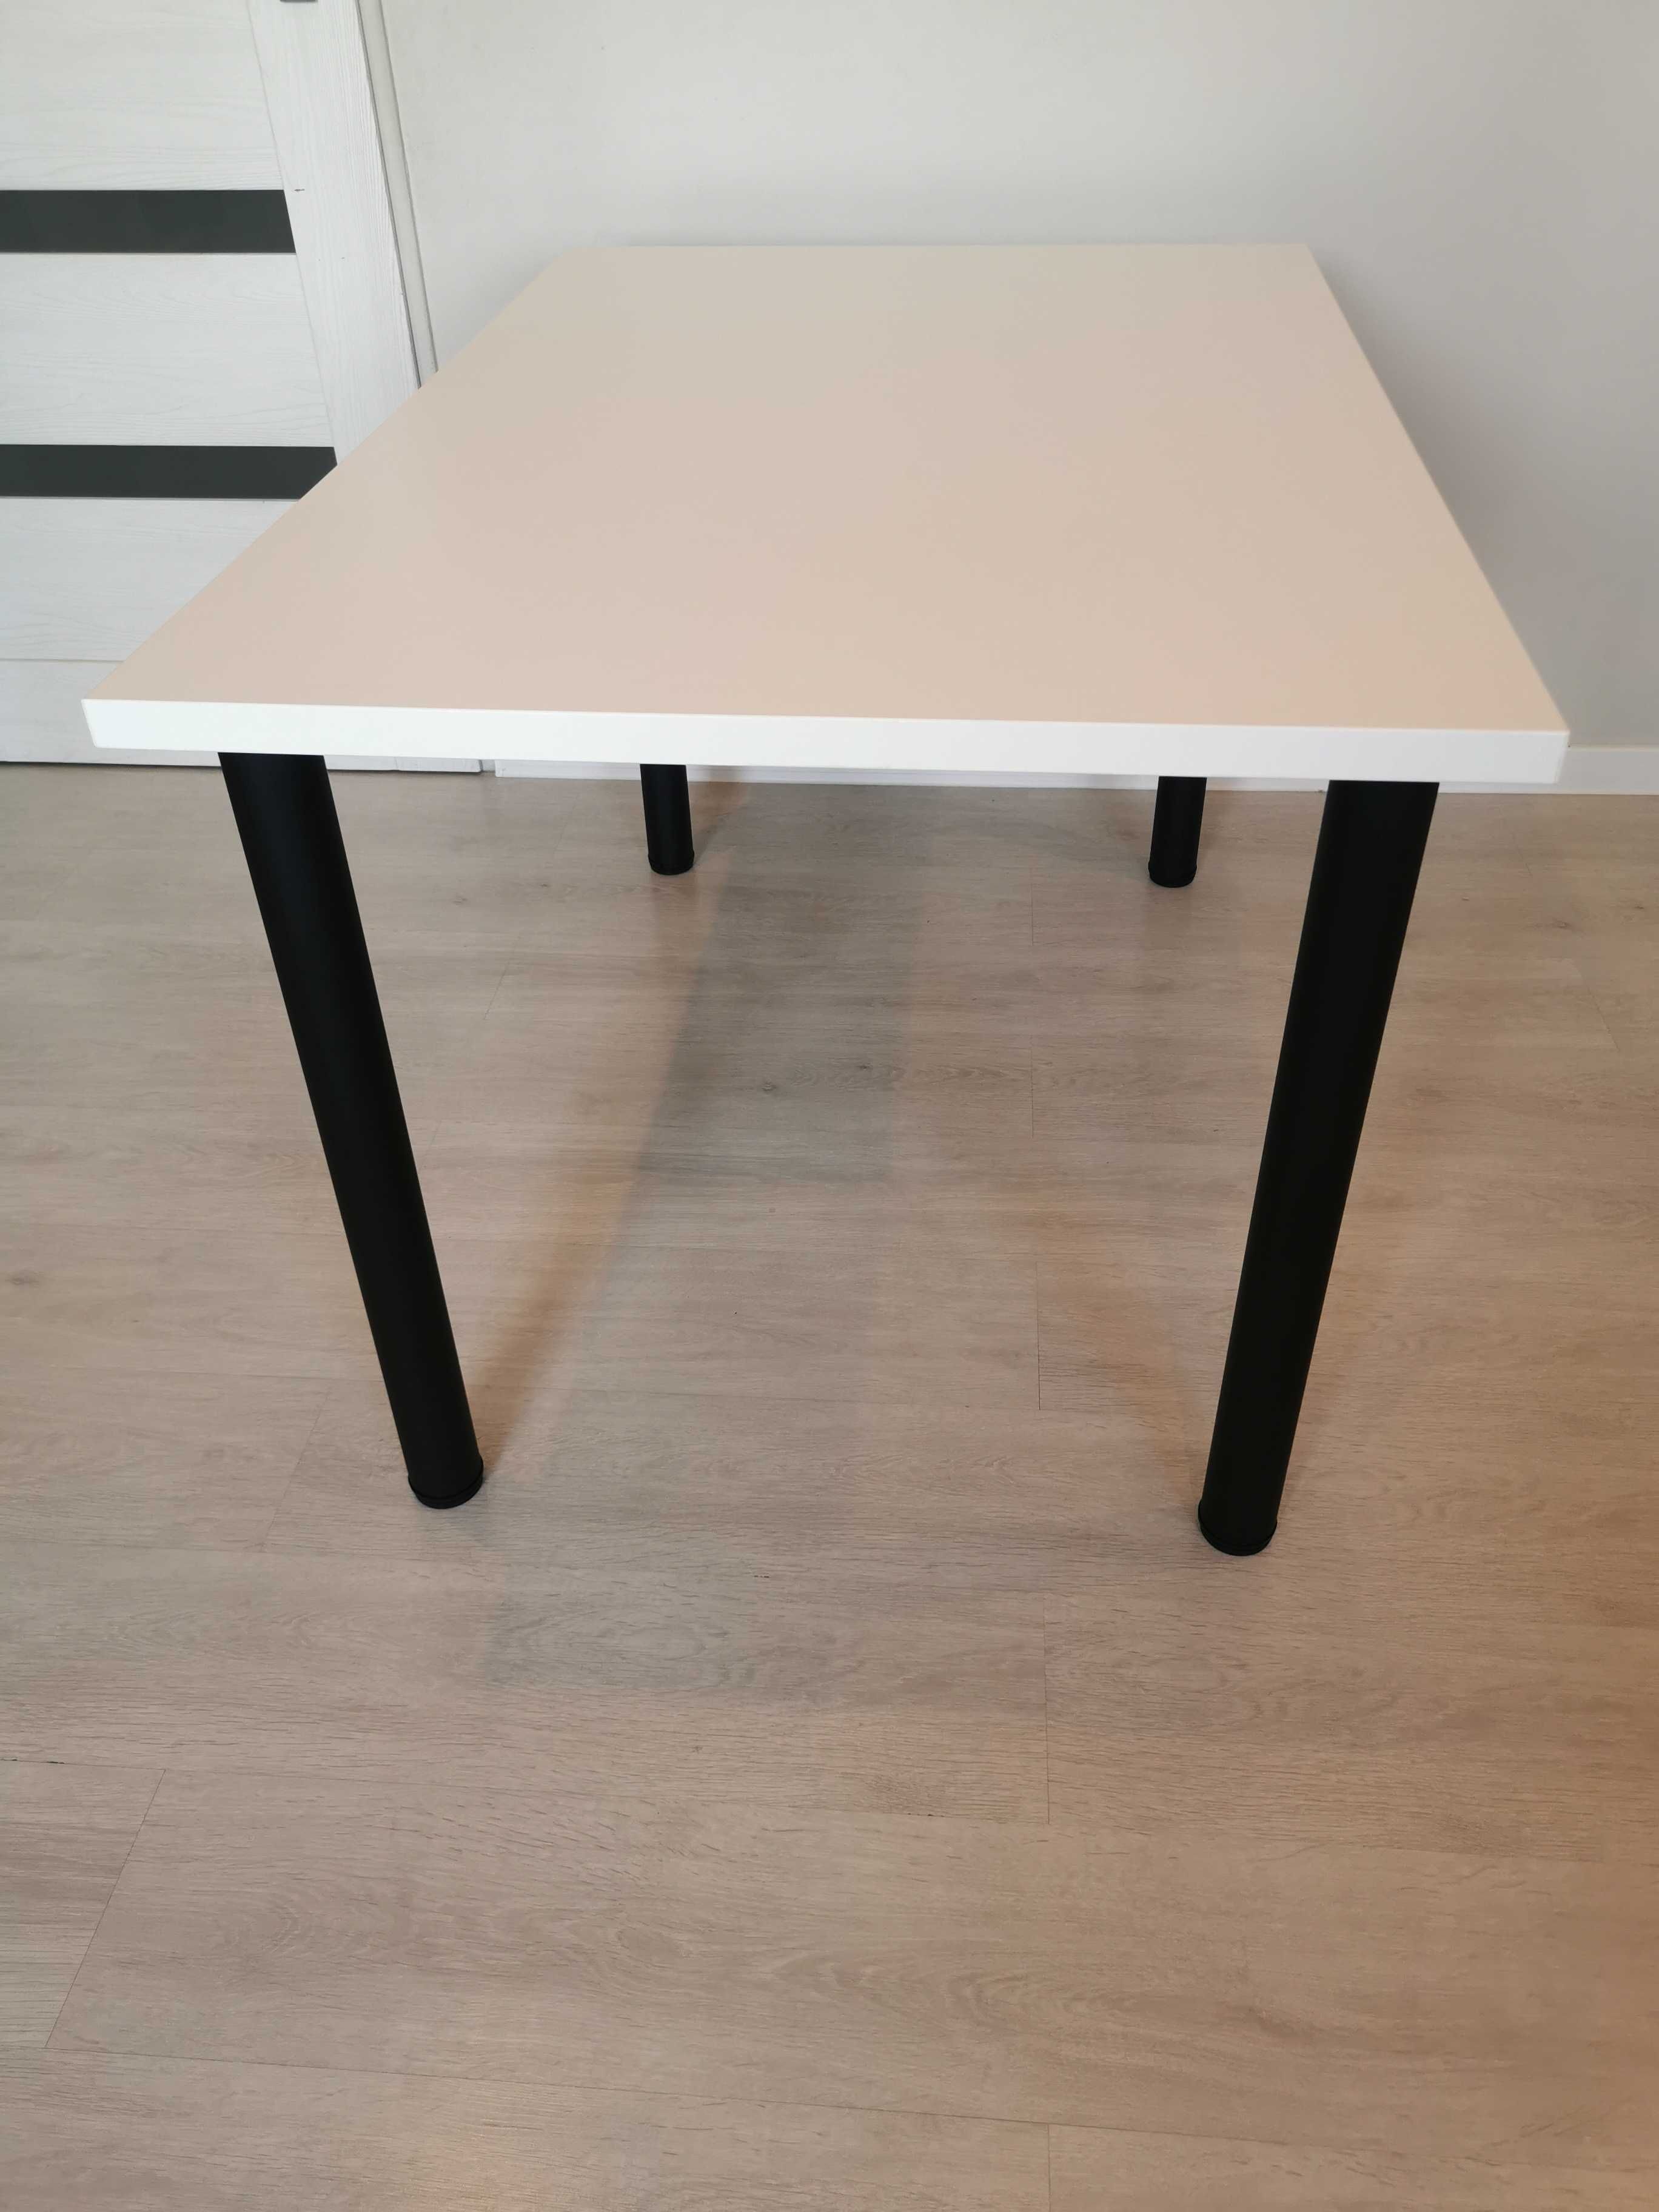 Super stół biurko białe 120x80 Nowe